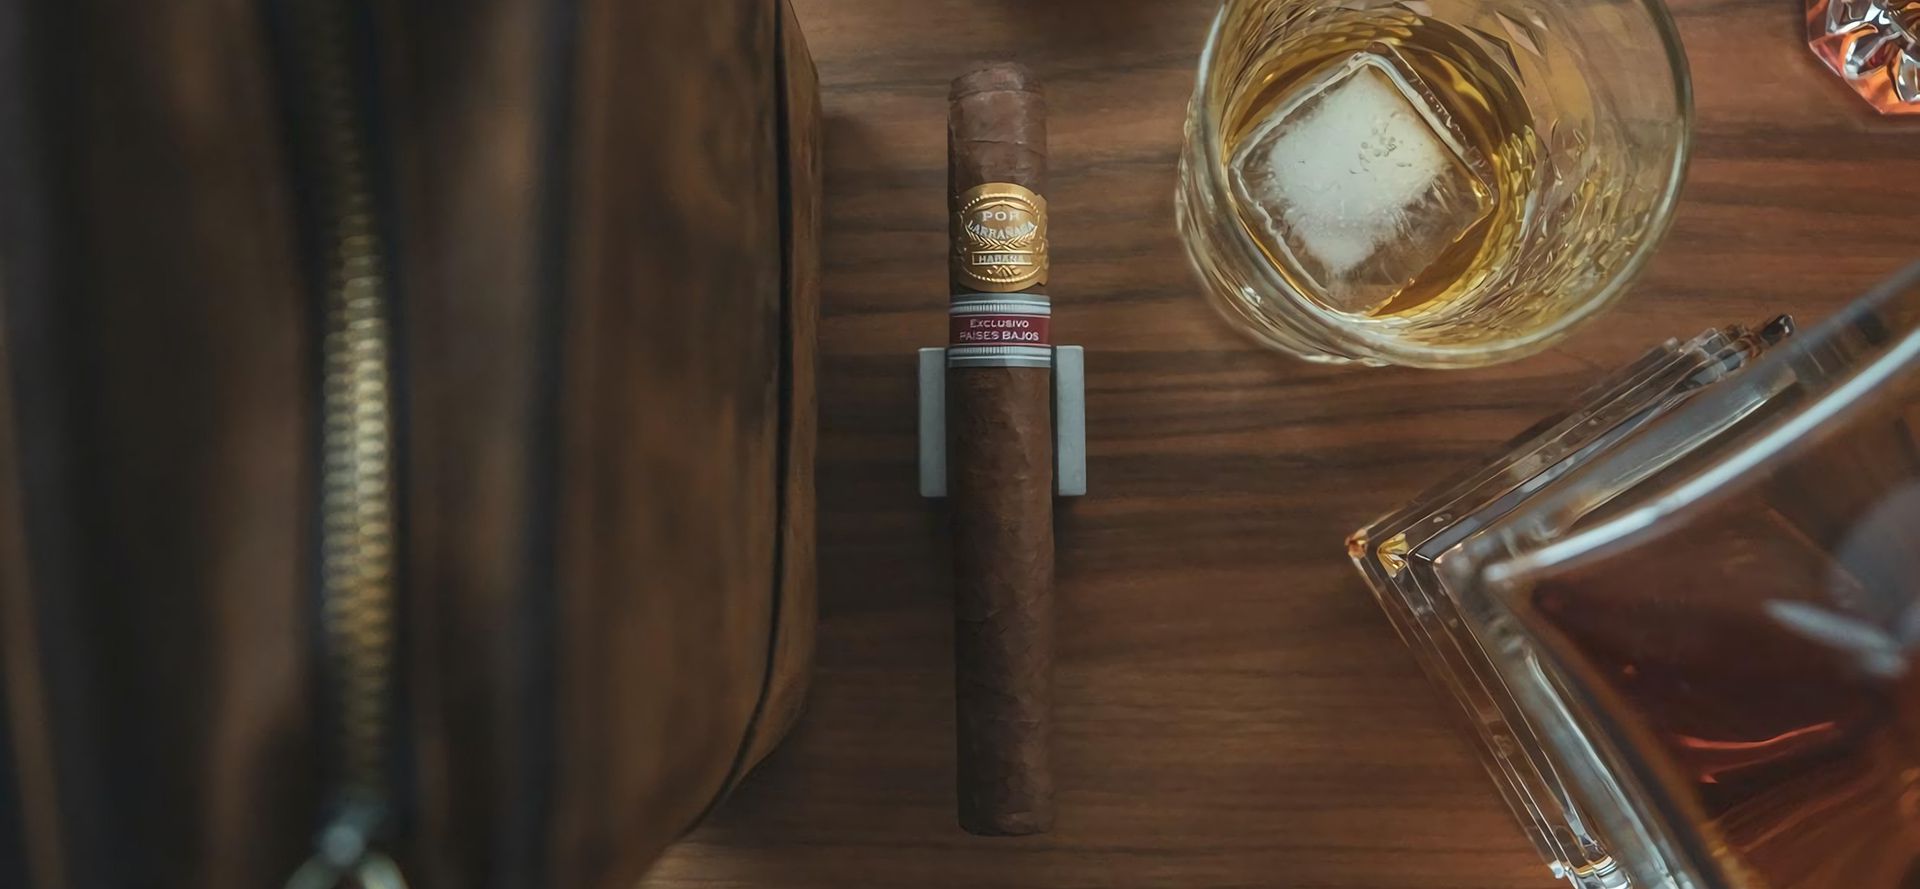 Connecticut Cigars.